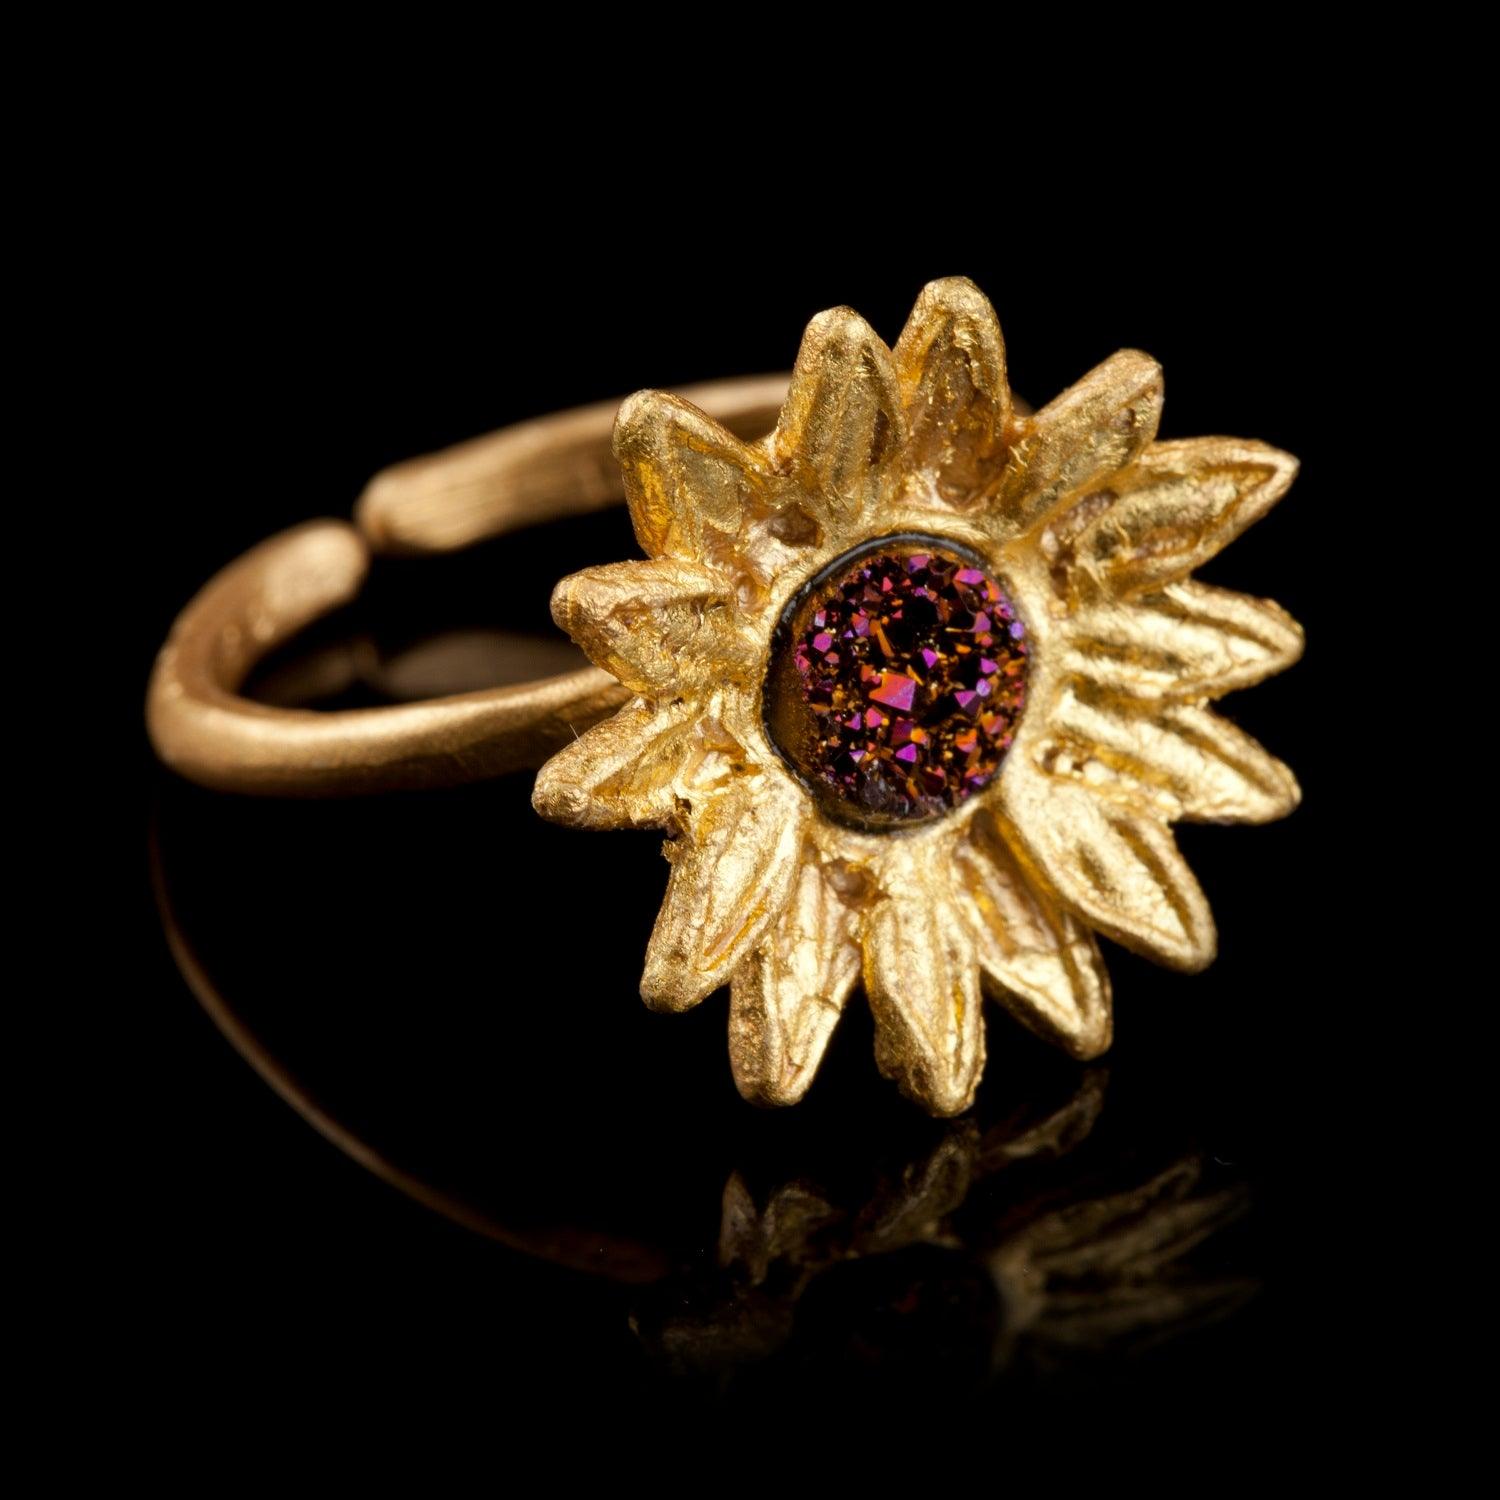 Sunflower Ring - Small - Michael Michaud Jewellery